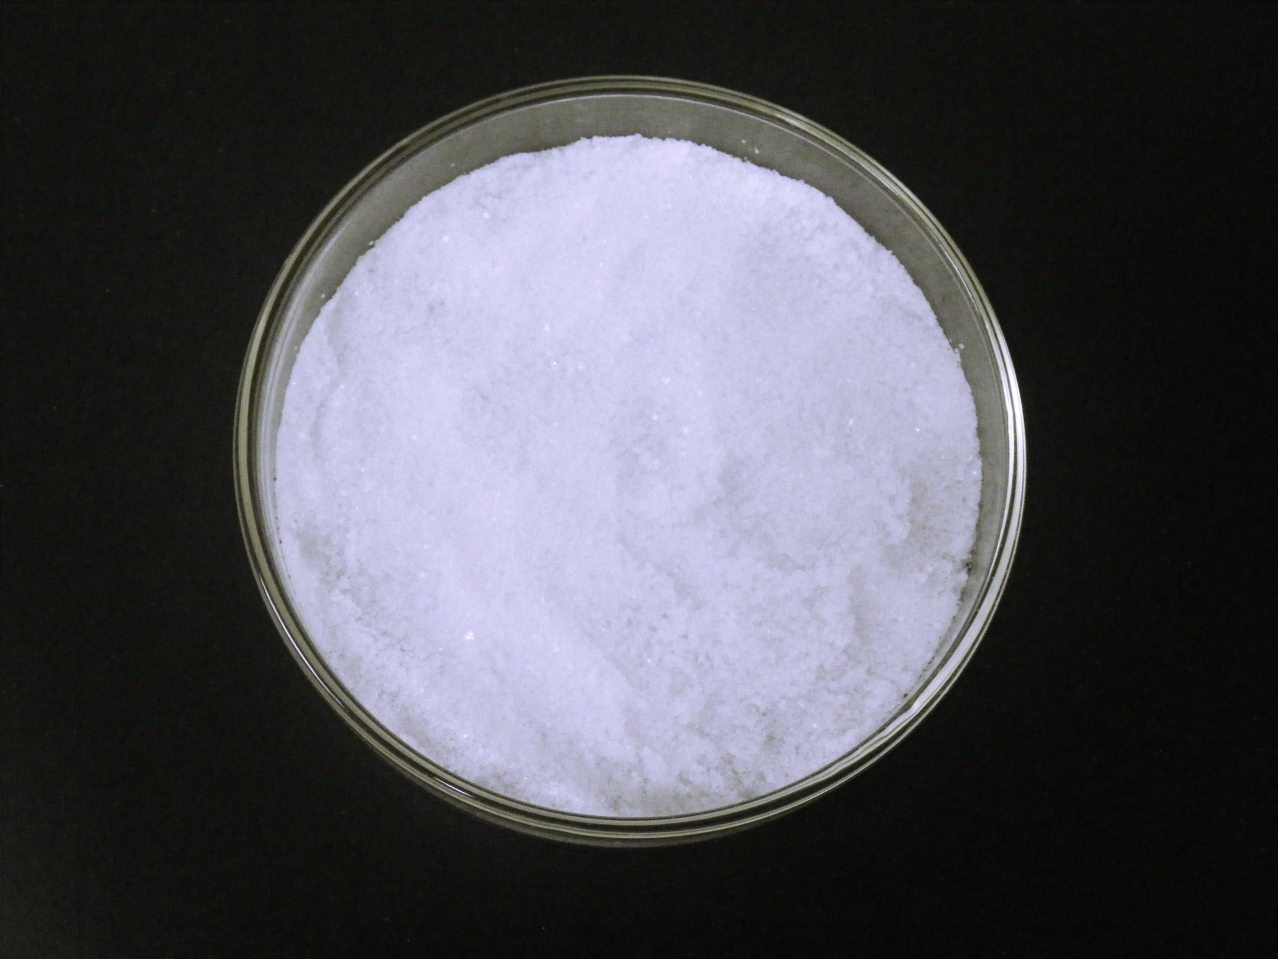 Barium Hydroxide Octahydrate